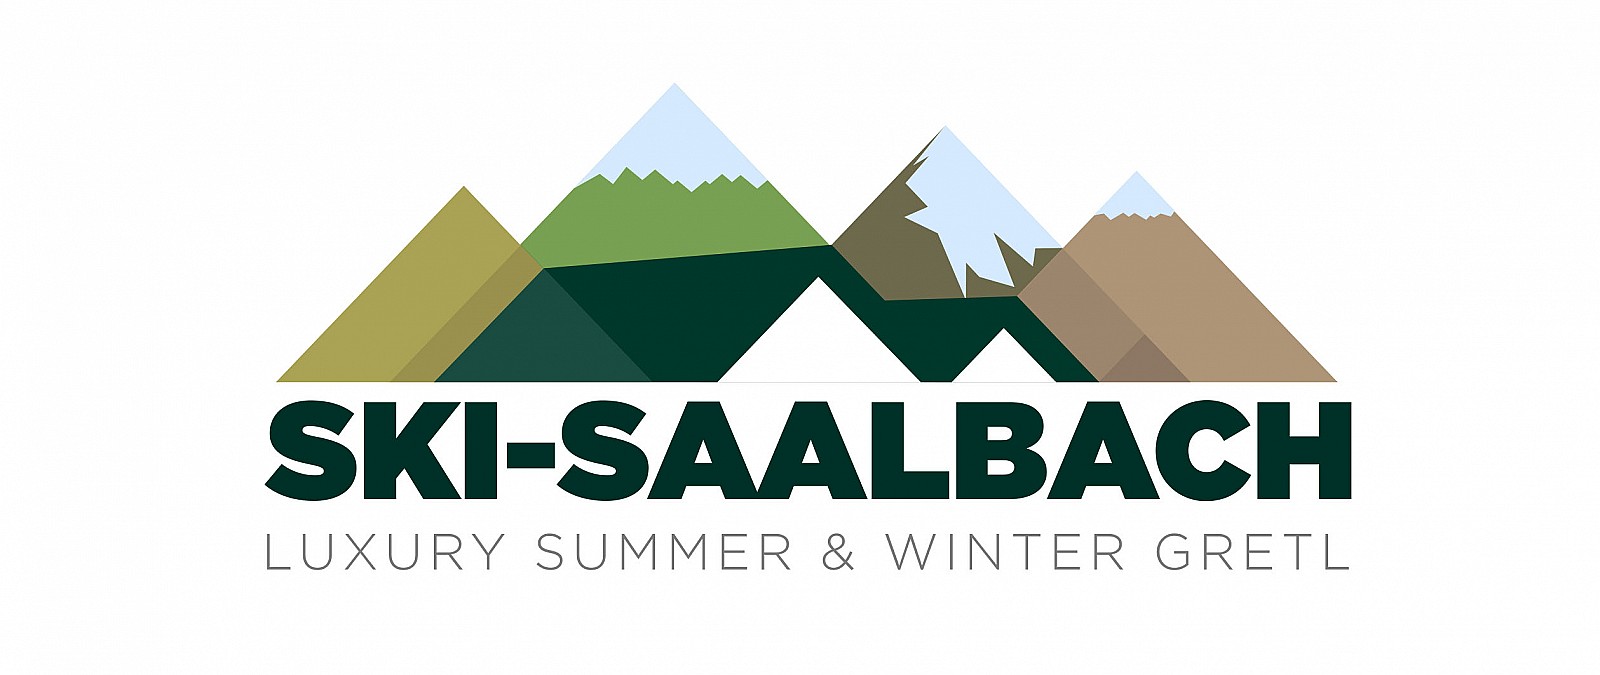 Ski Sallback Logo